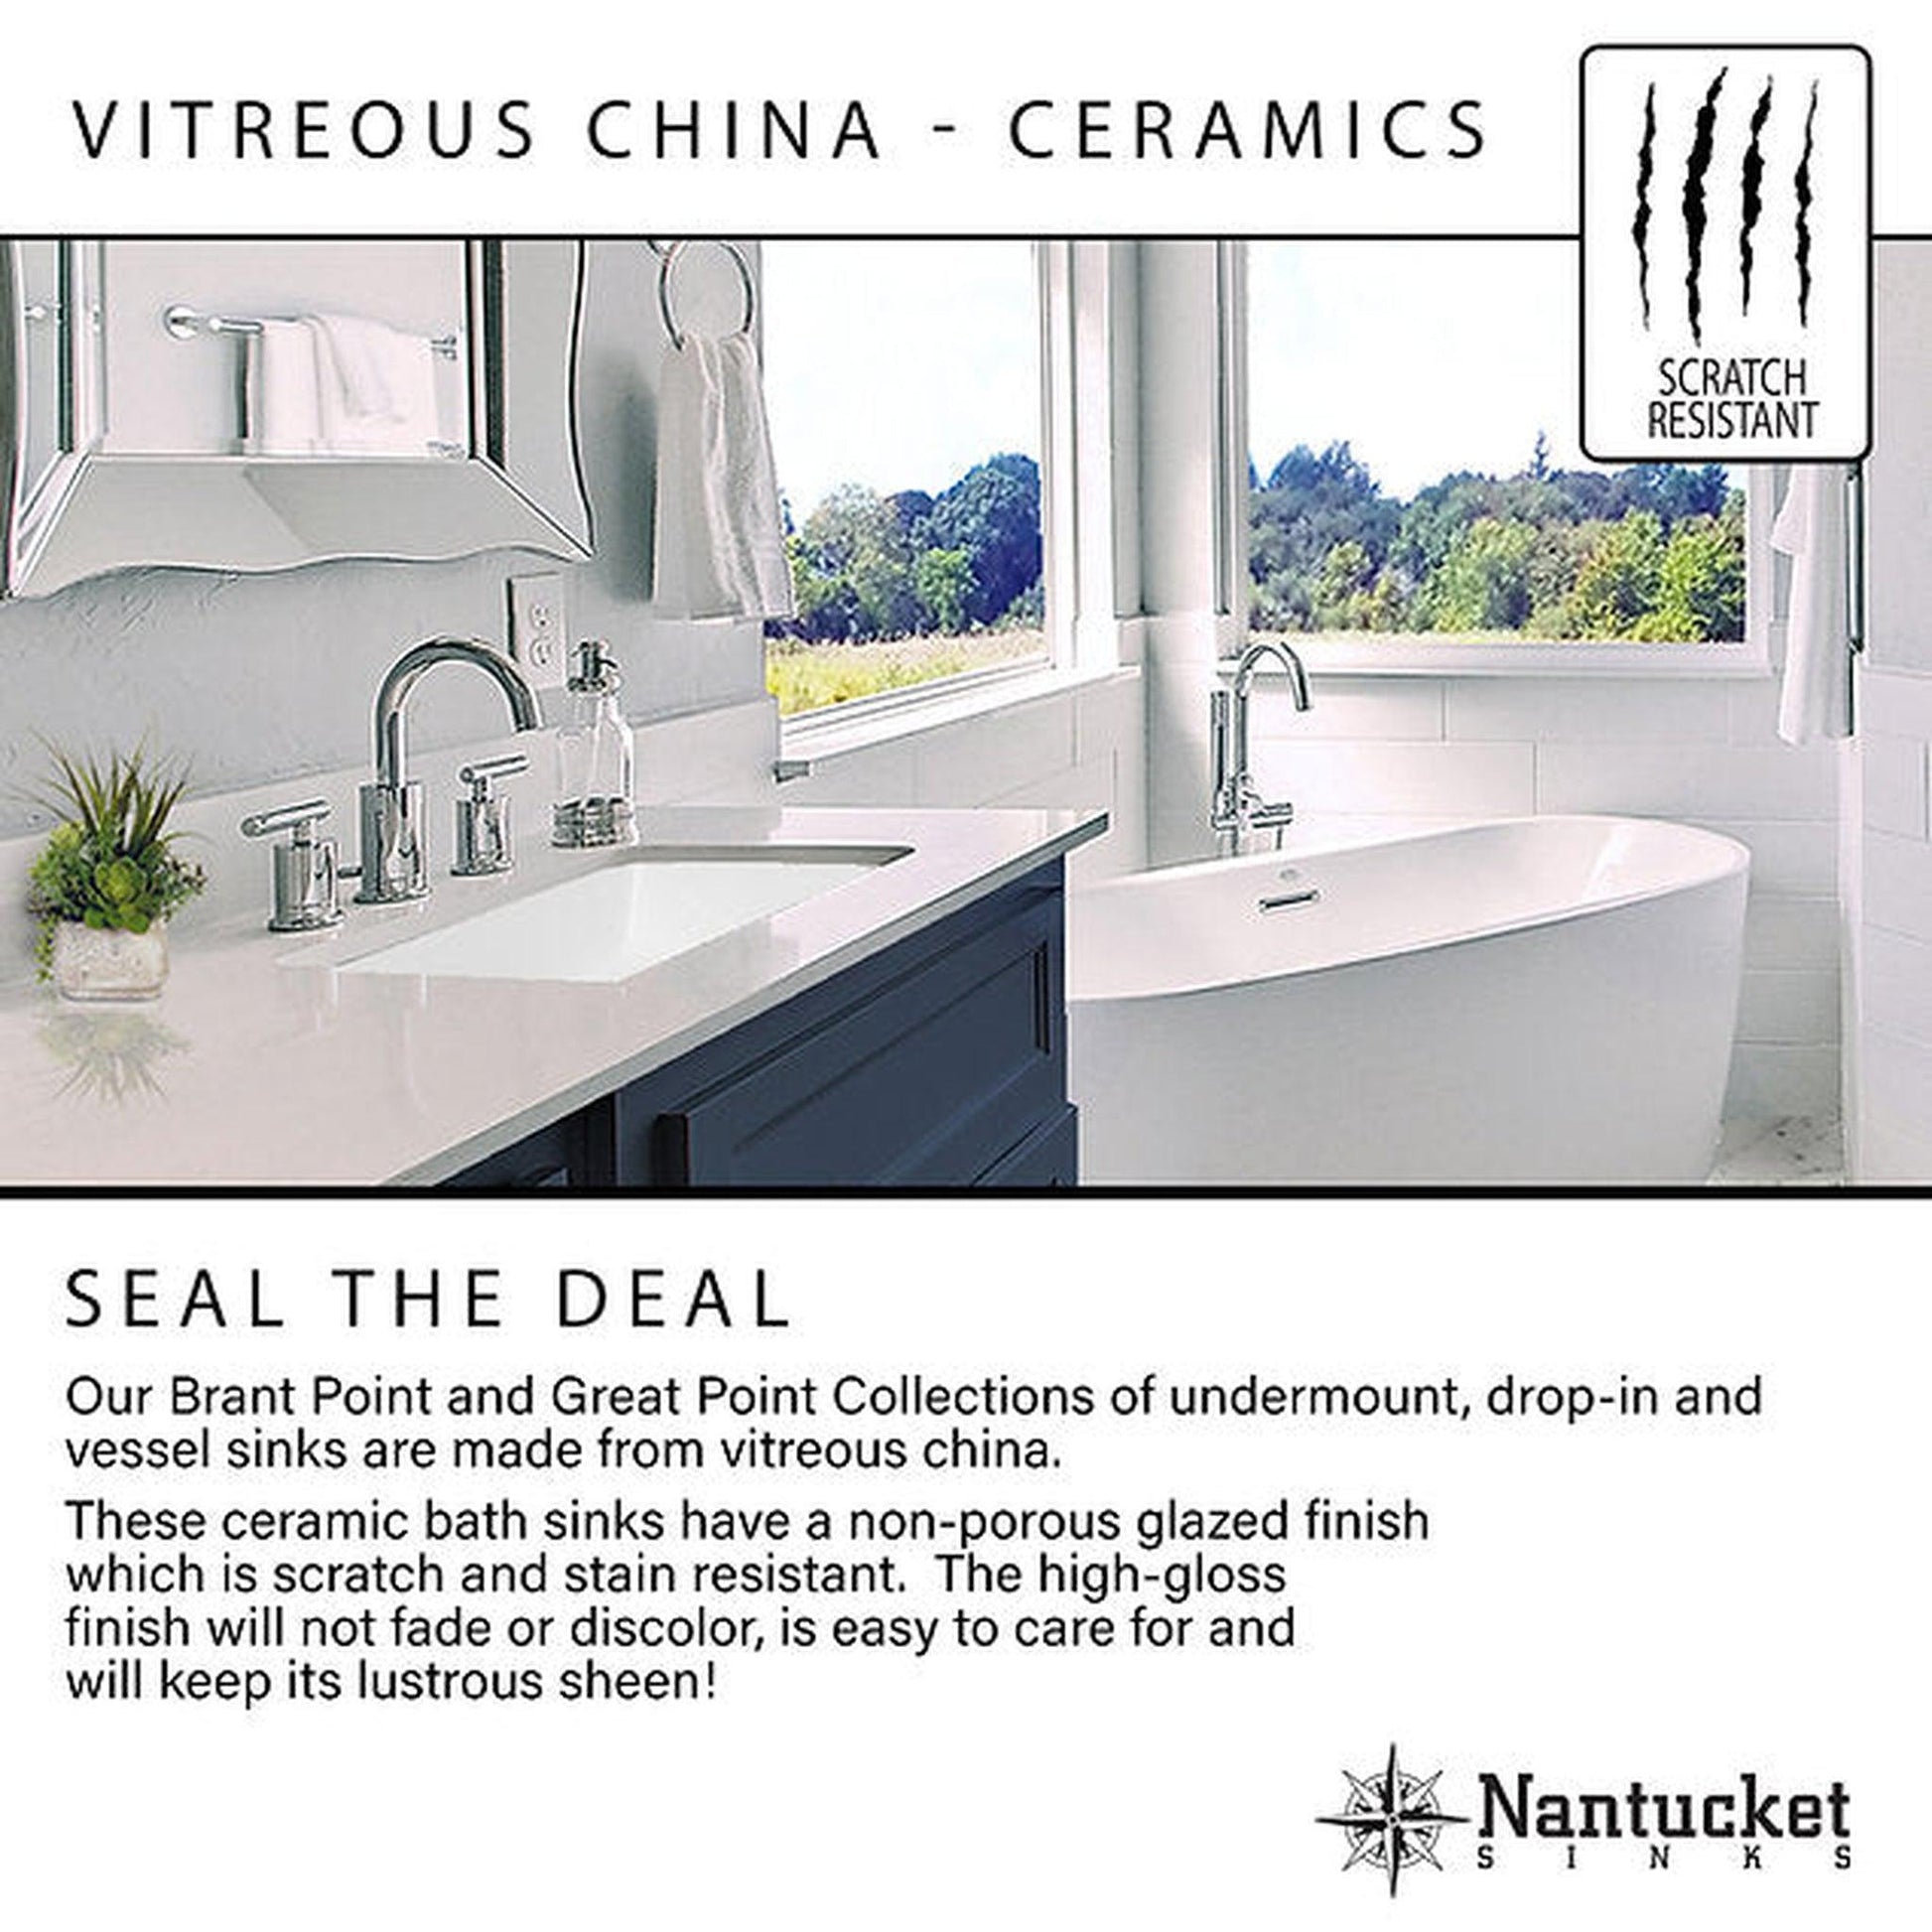 Nantucket Sinks Great Point 20" W x 16" D Oval Porcelain Enamel Glaze Undermount Ceramic Sink In White With Oveflow